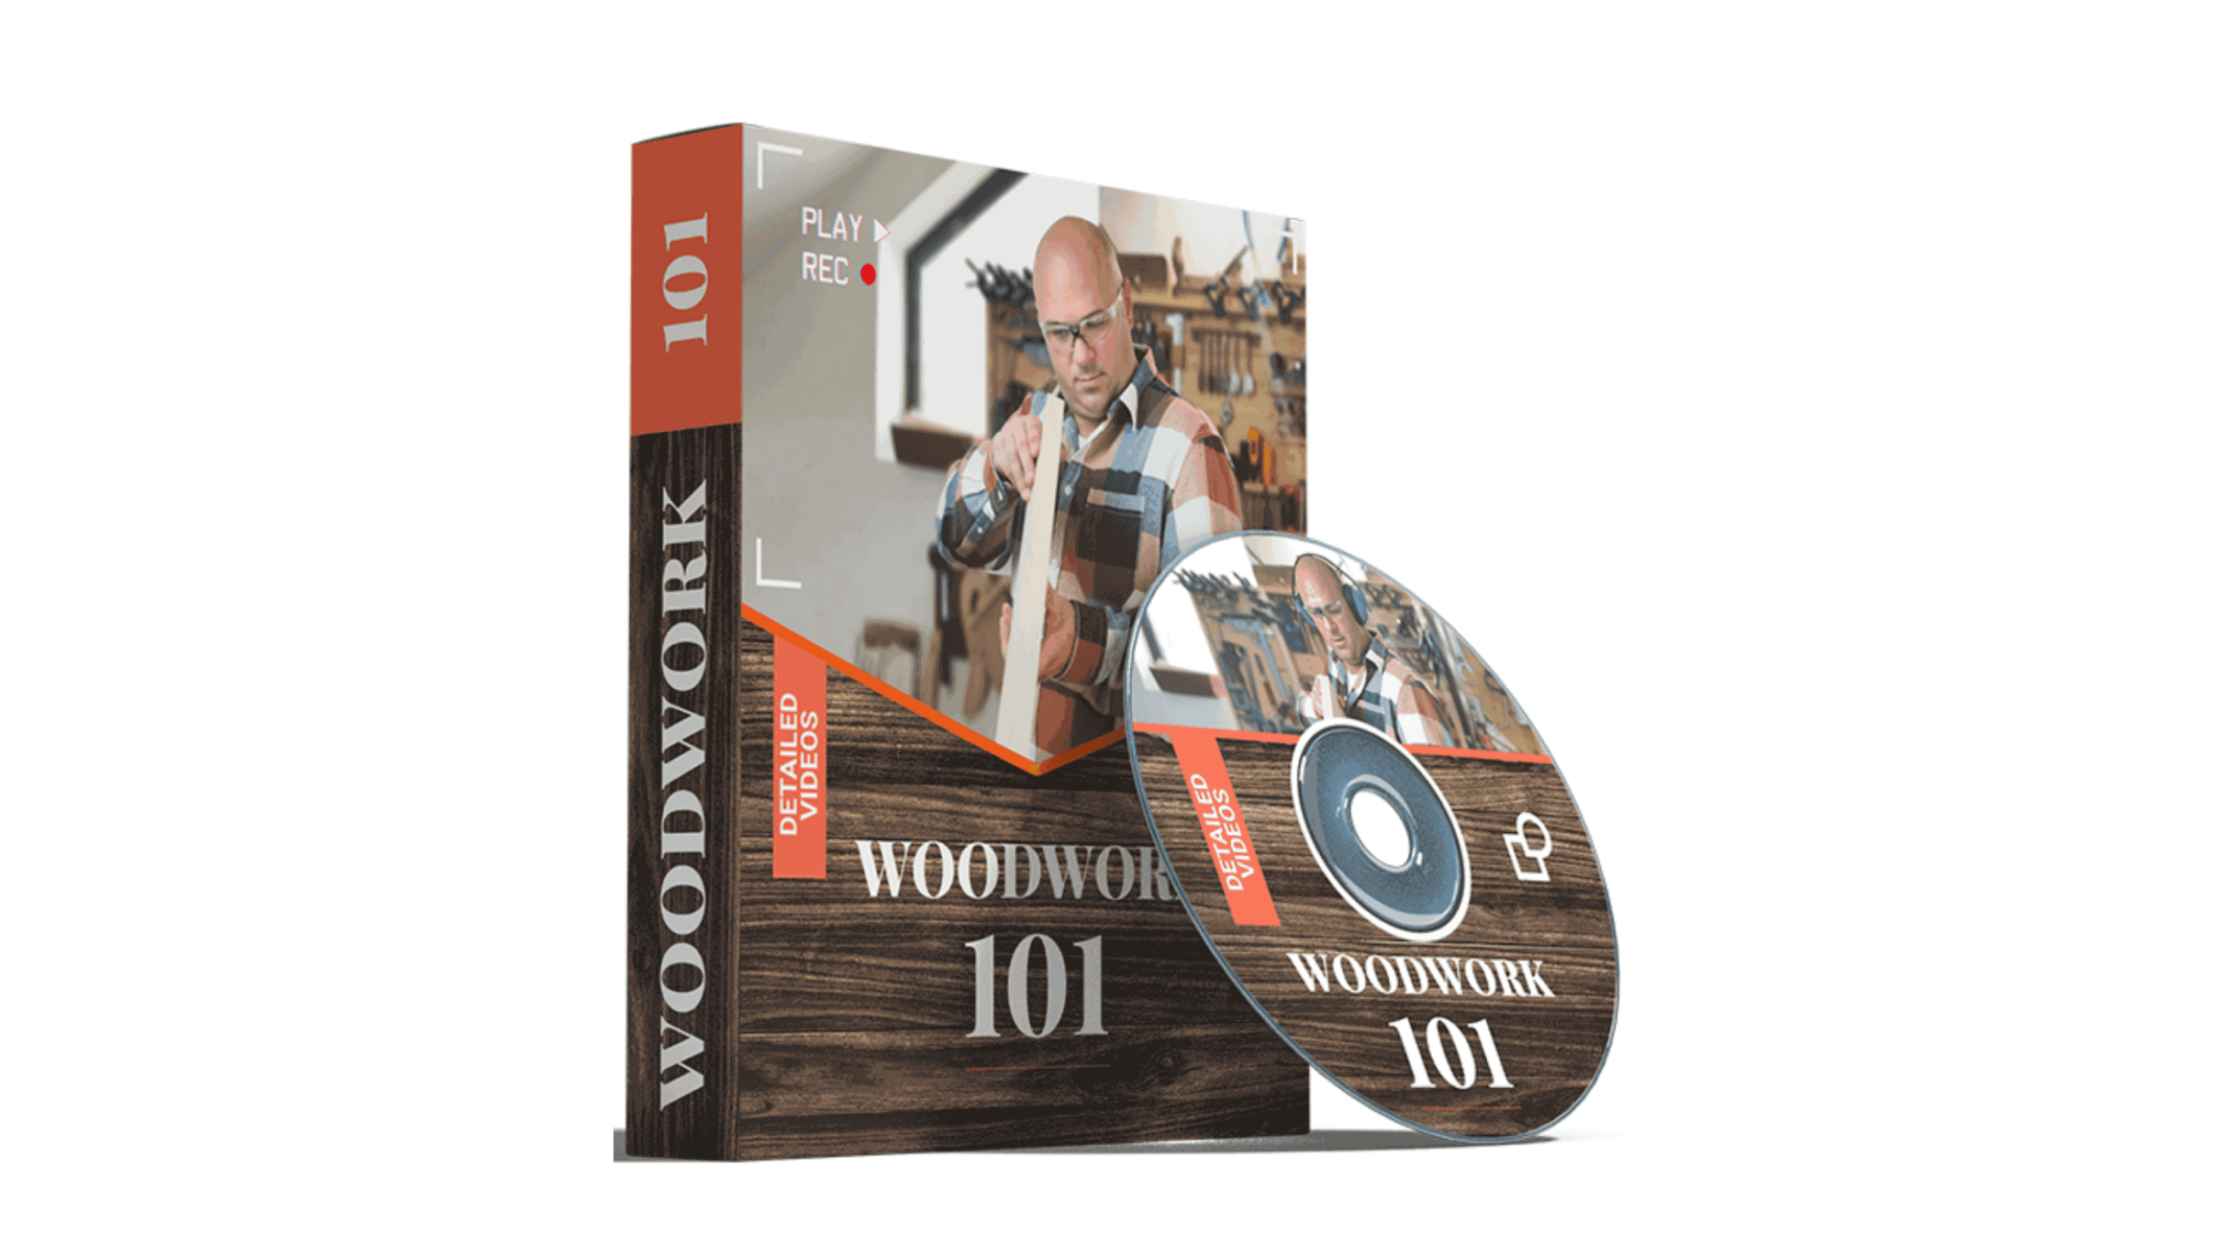 Woodwork 101 Reviews